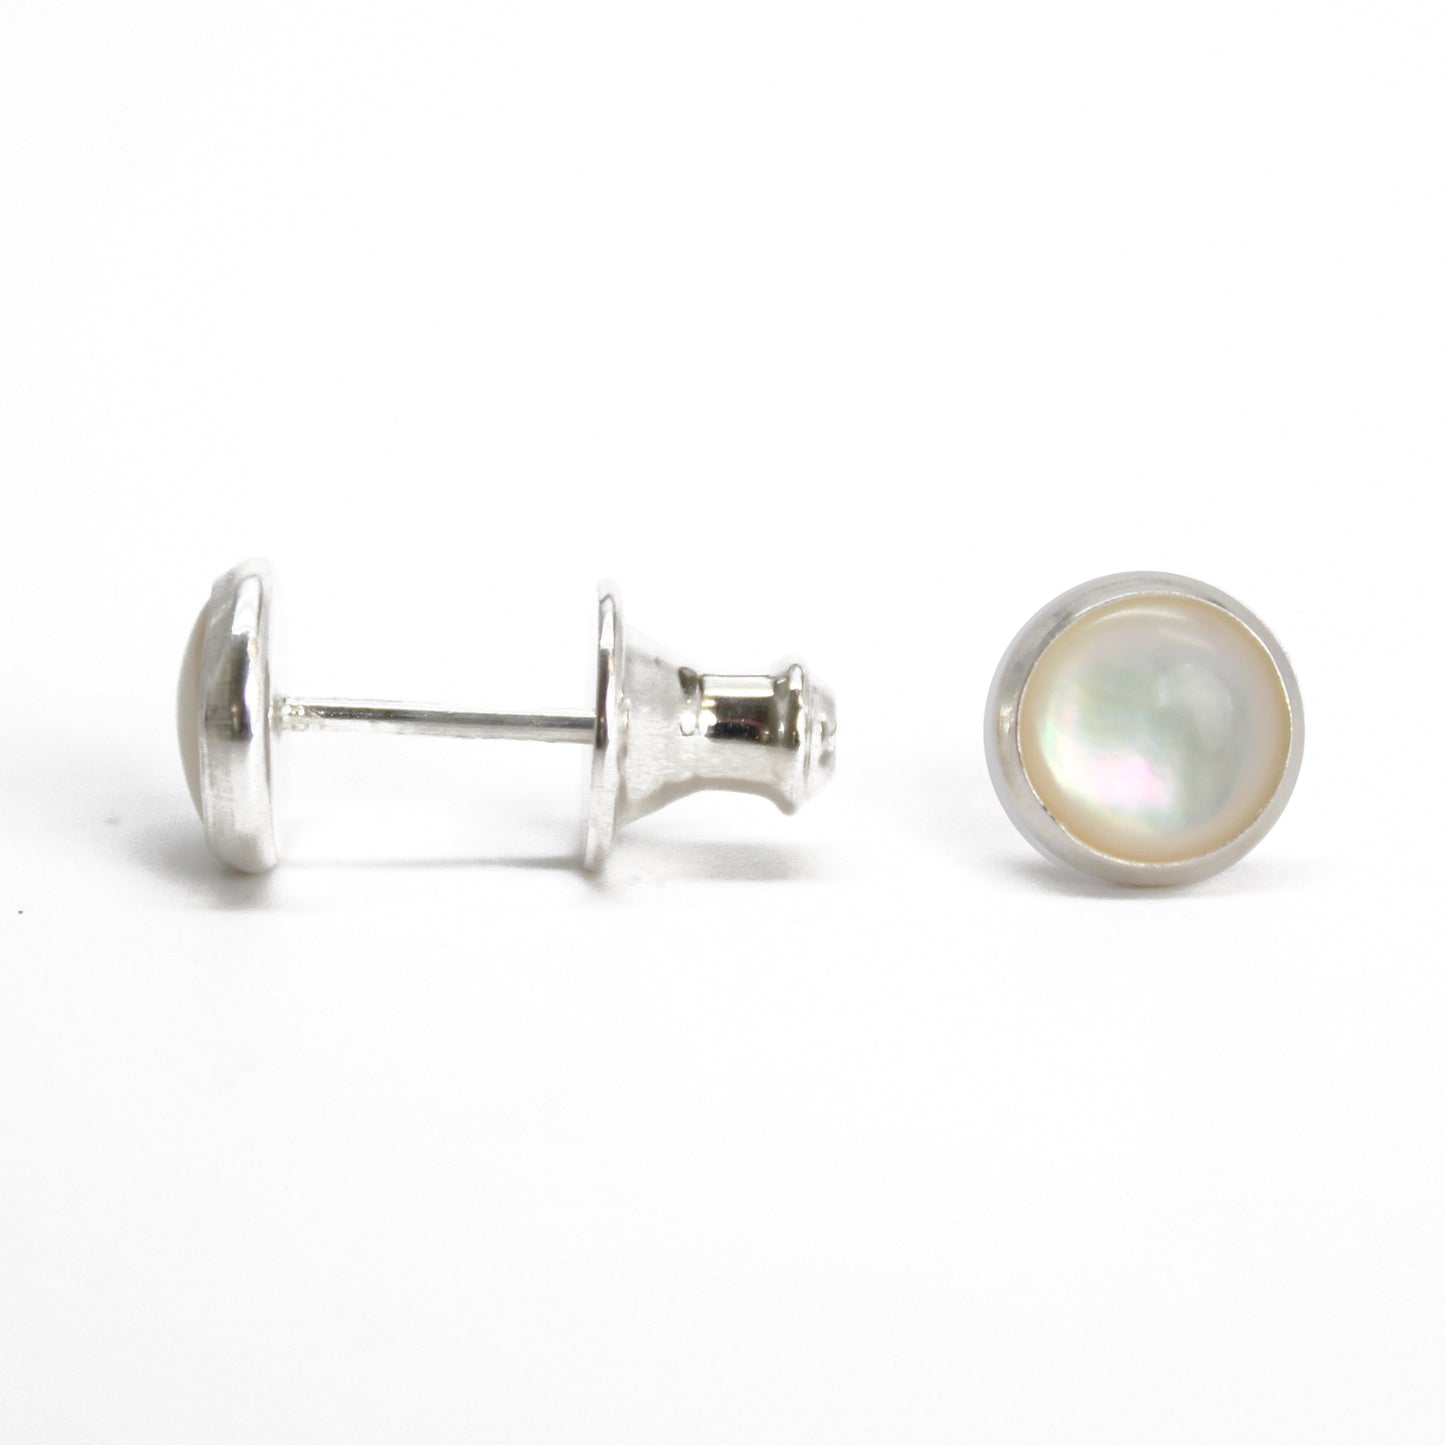 6mm Mother of Pearl Stud Earrings in Sterling Silver